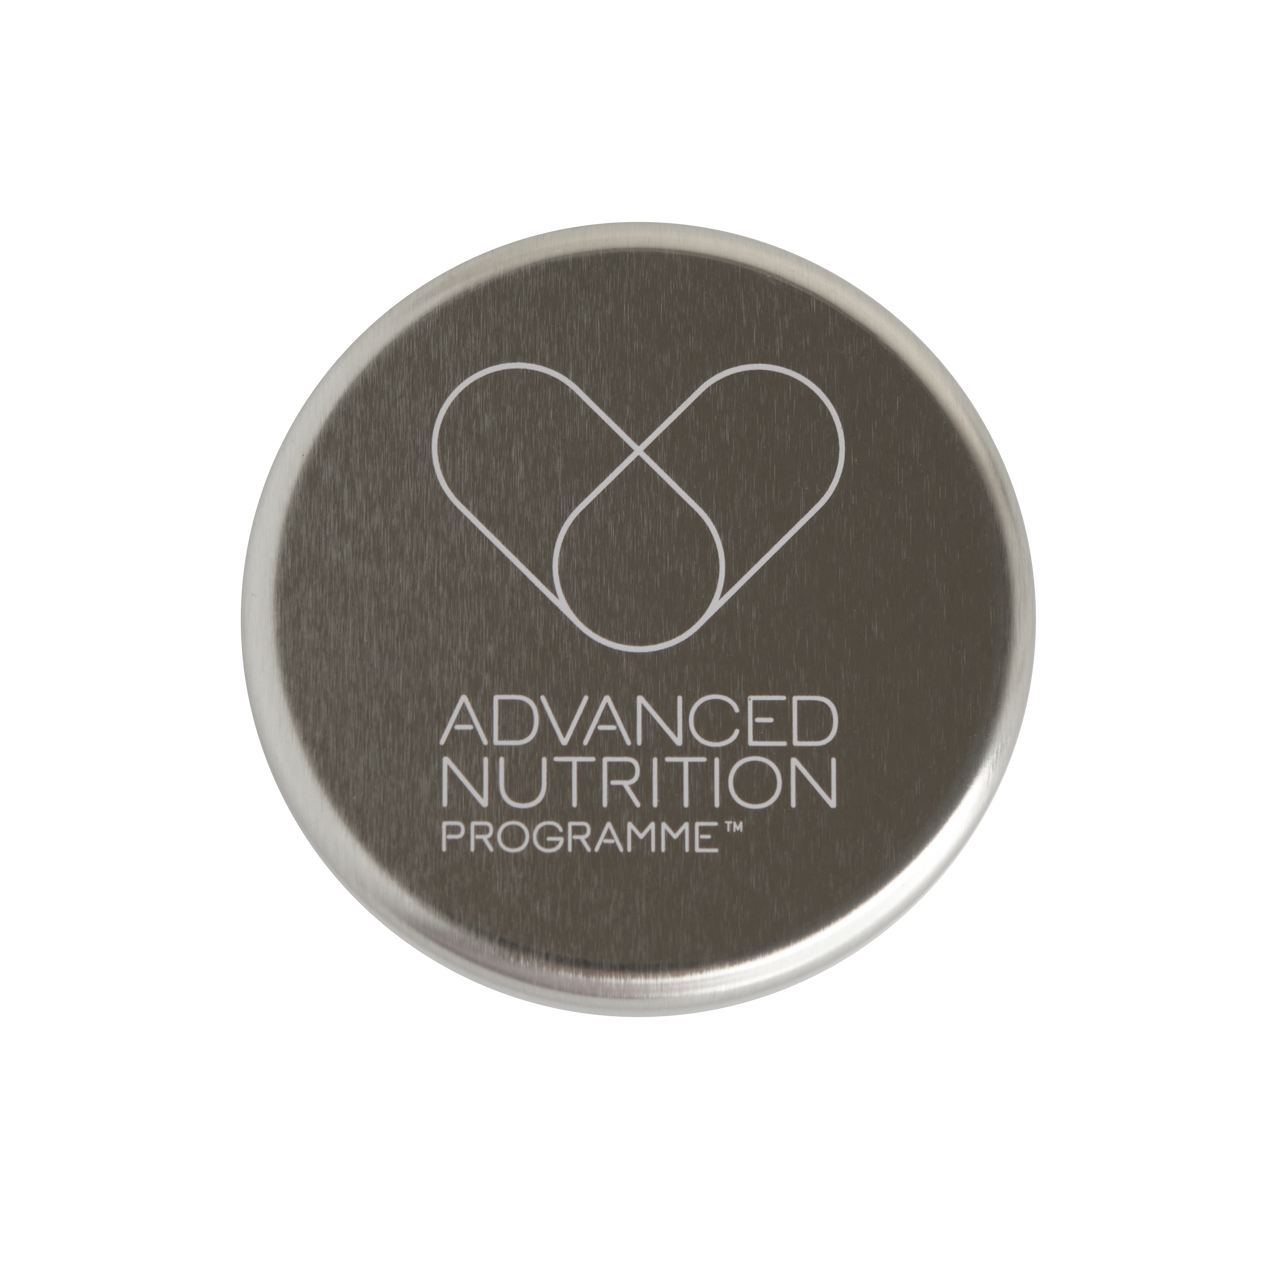 Advanced Nutrition Programme Travel Tin